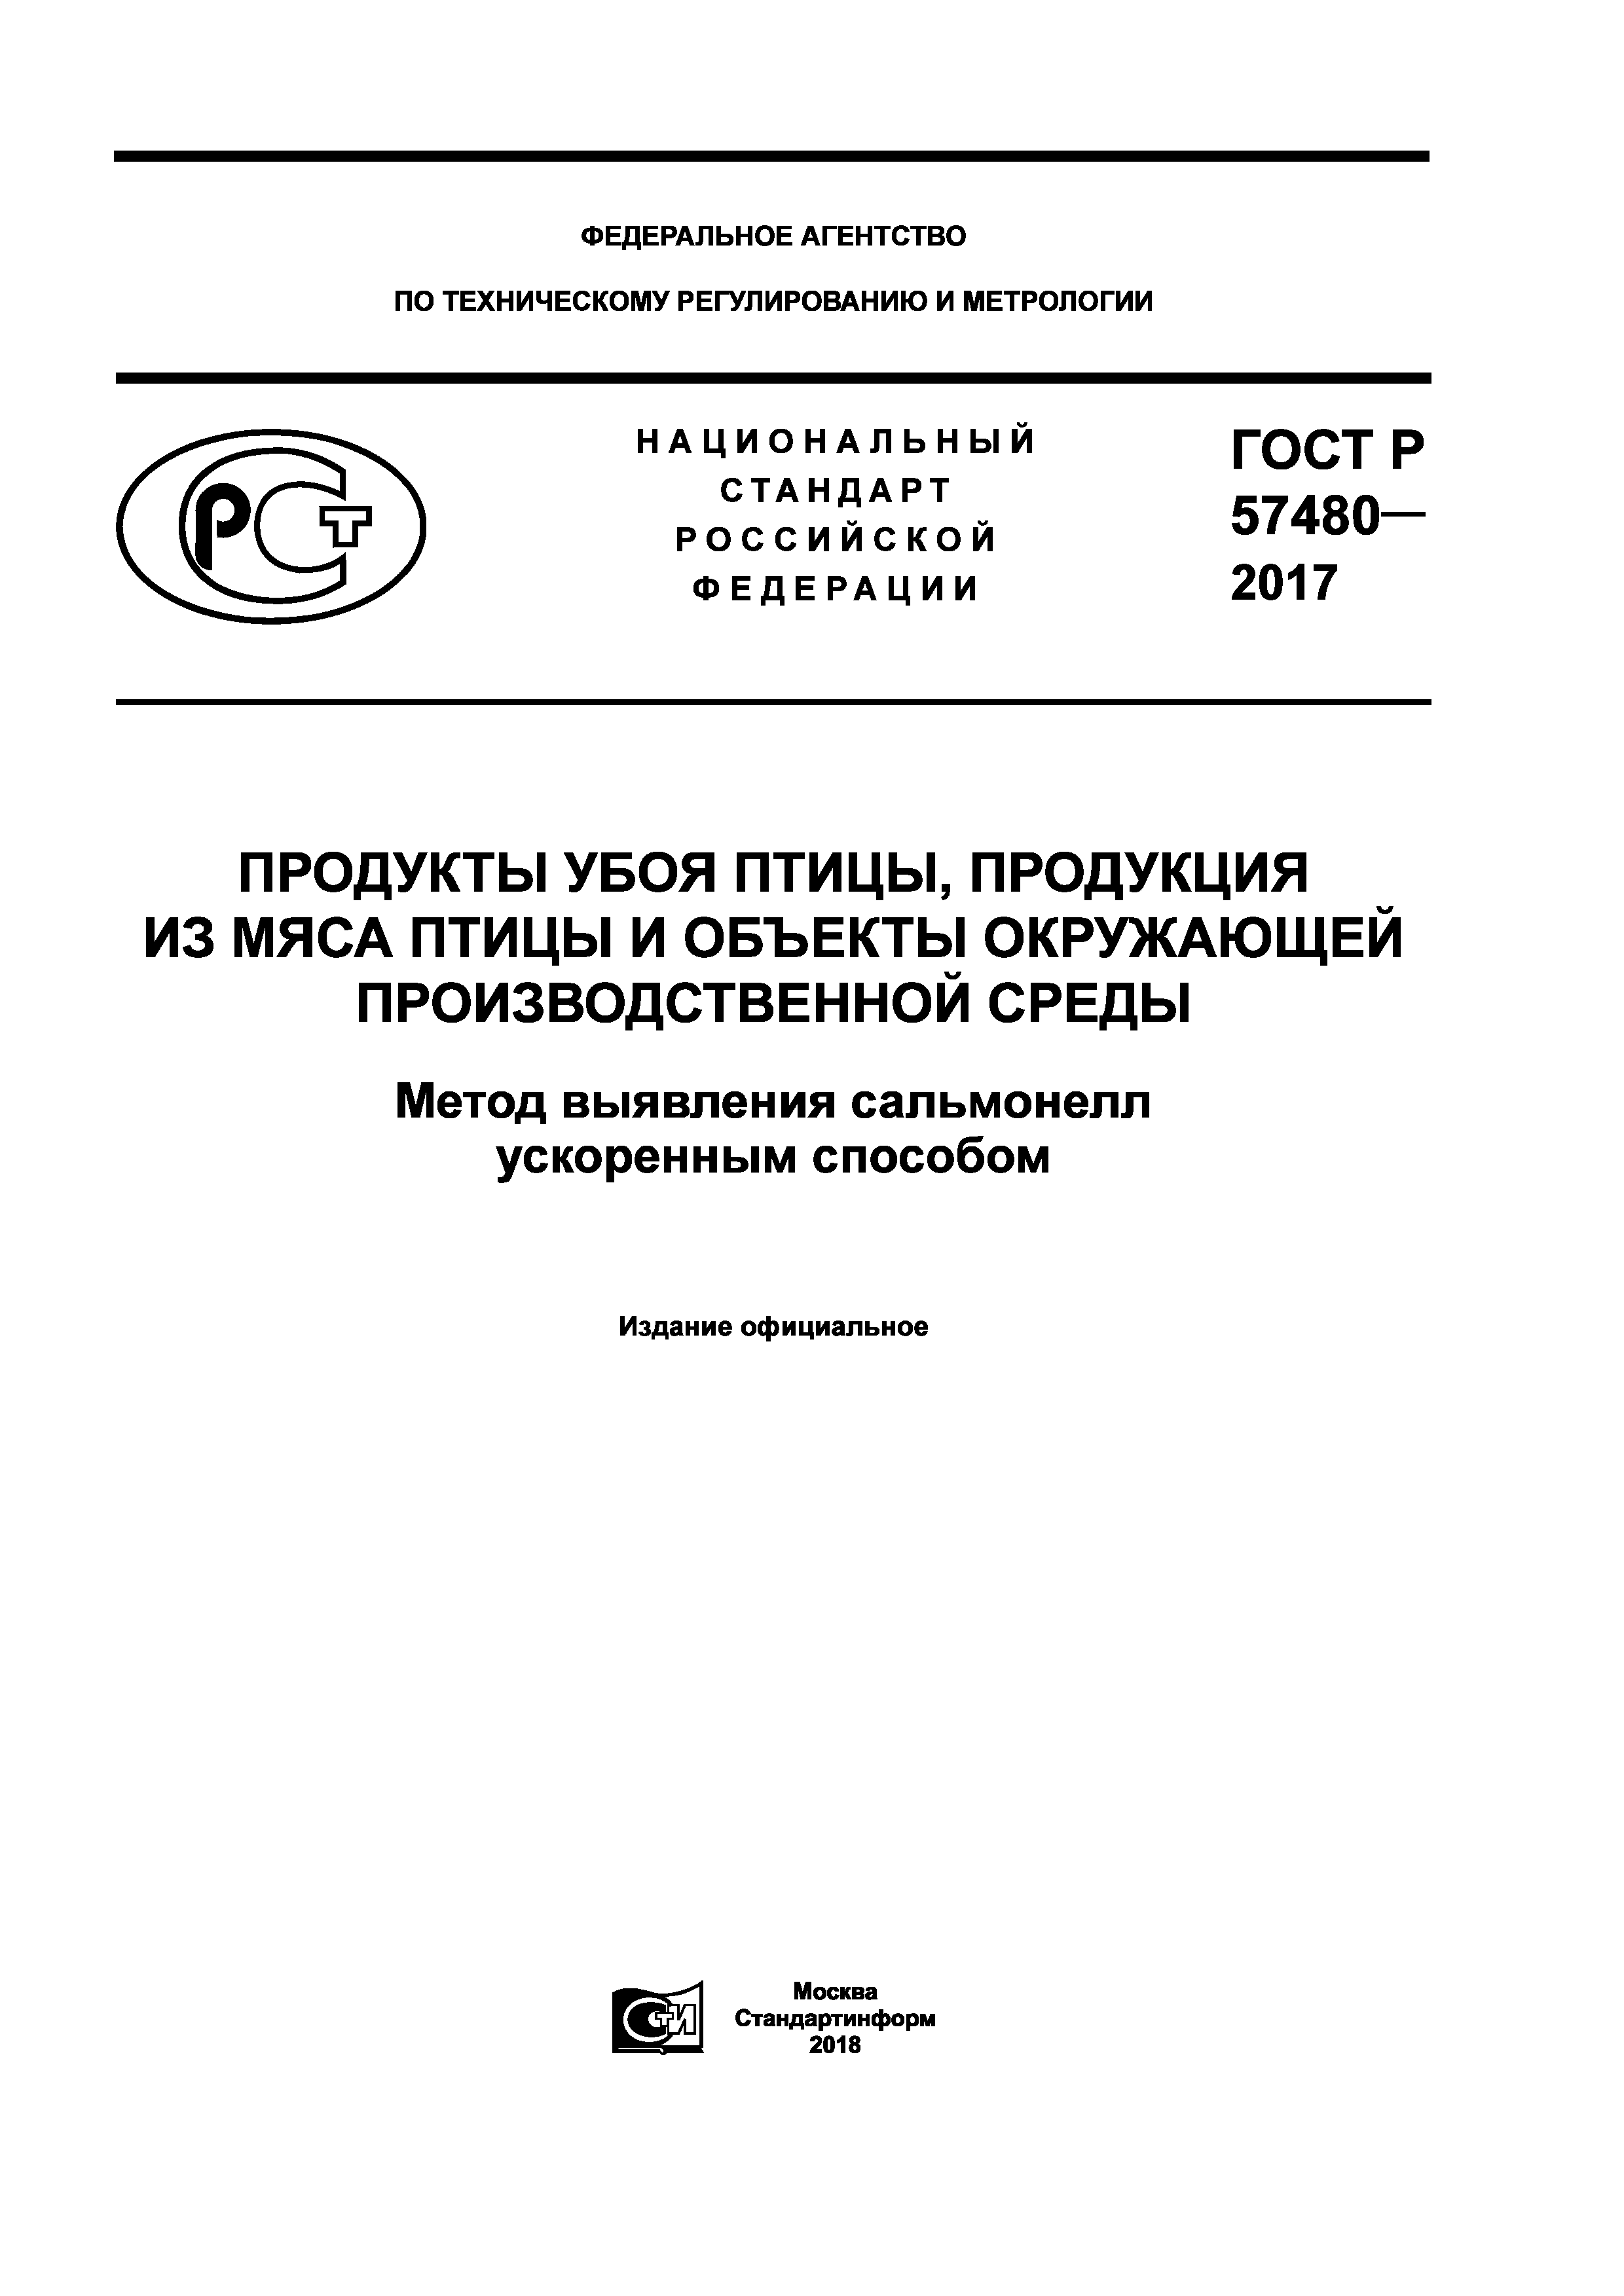 ГОСТ Р 57480-2017